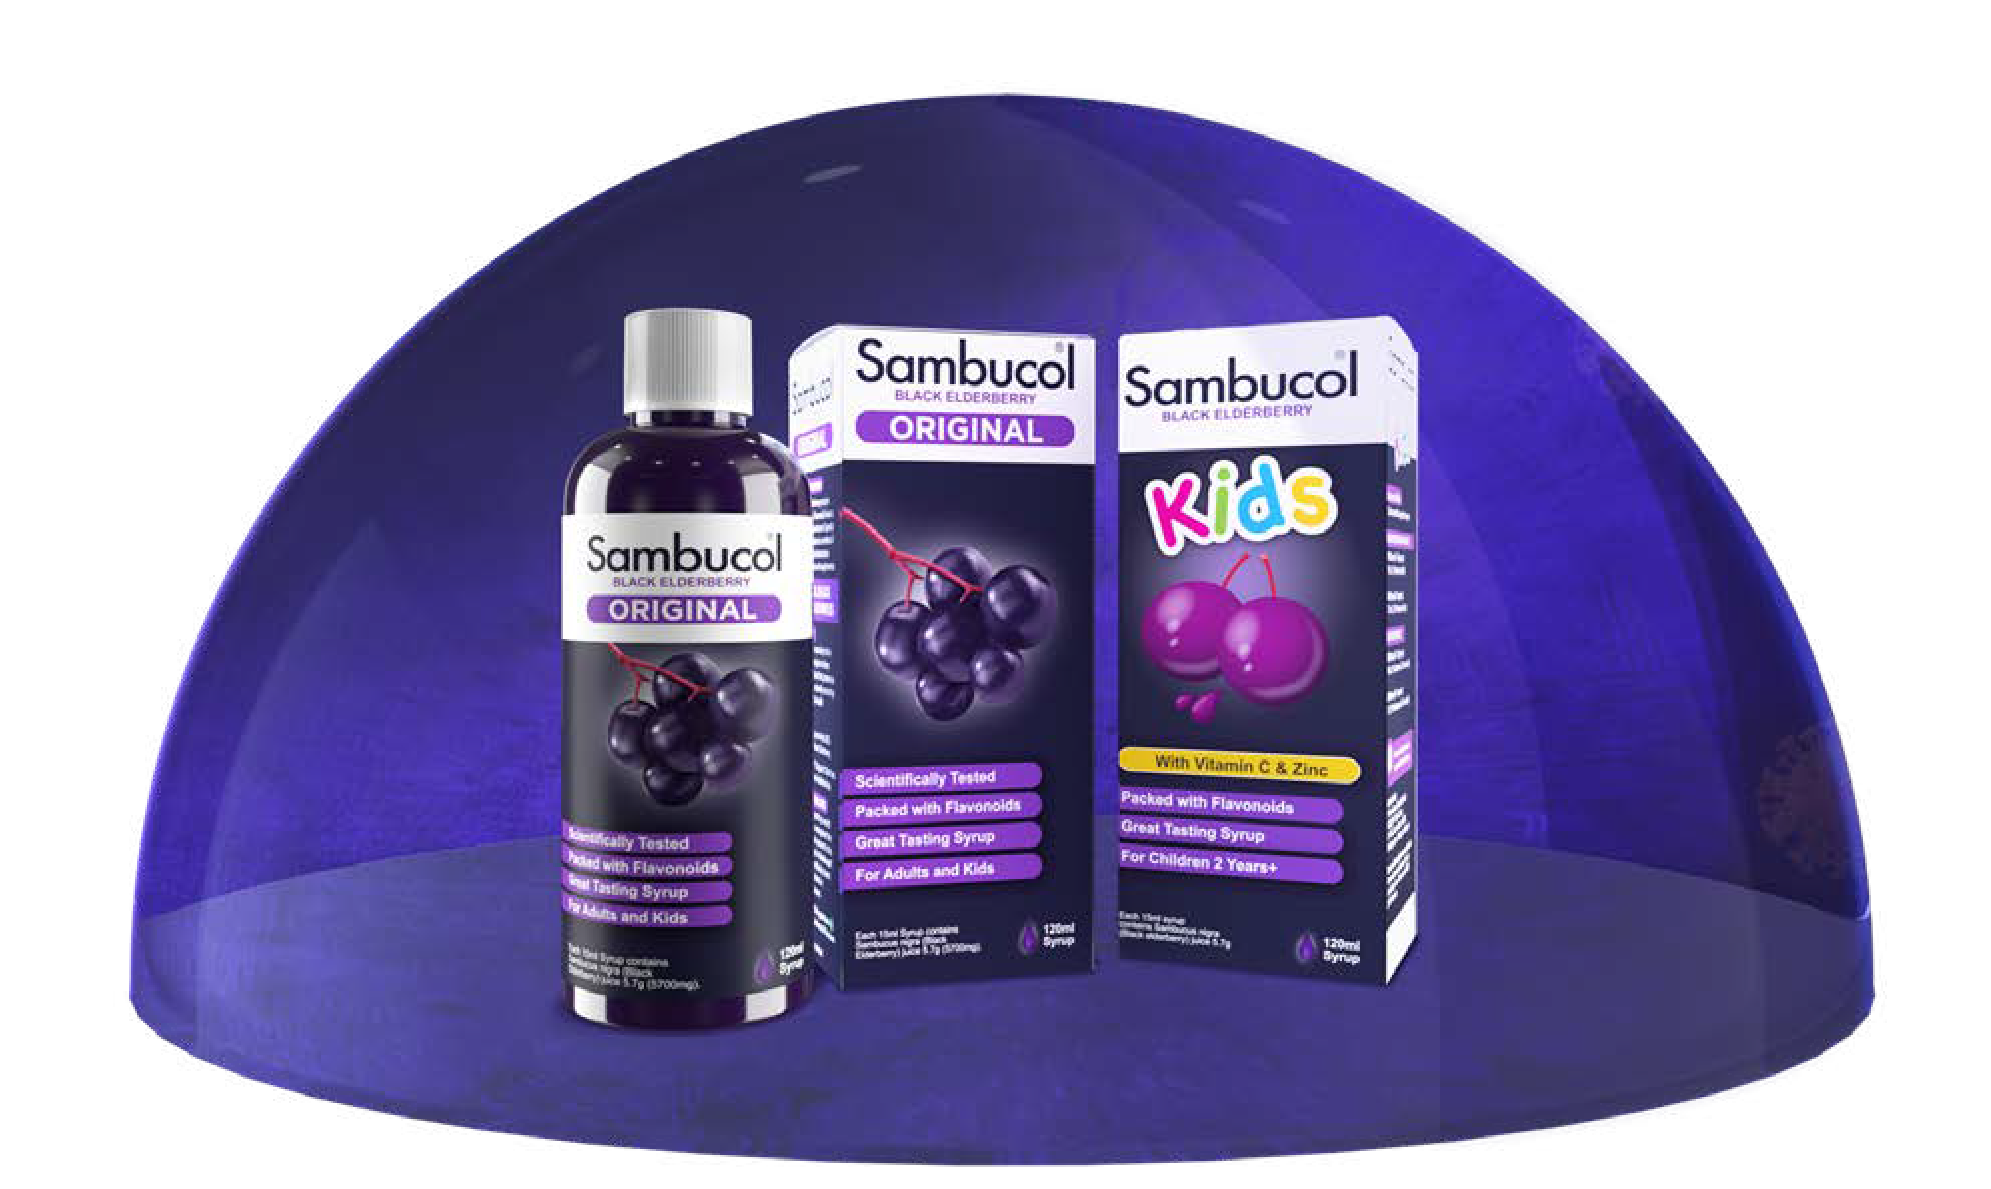 Sambucol black elderberry